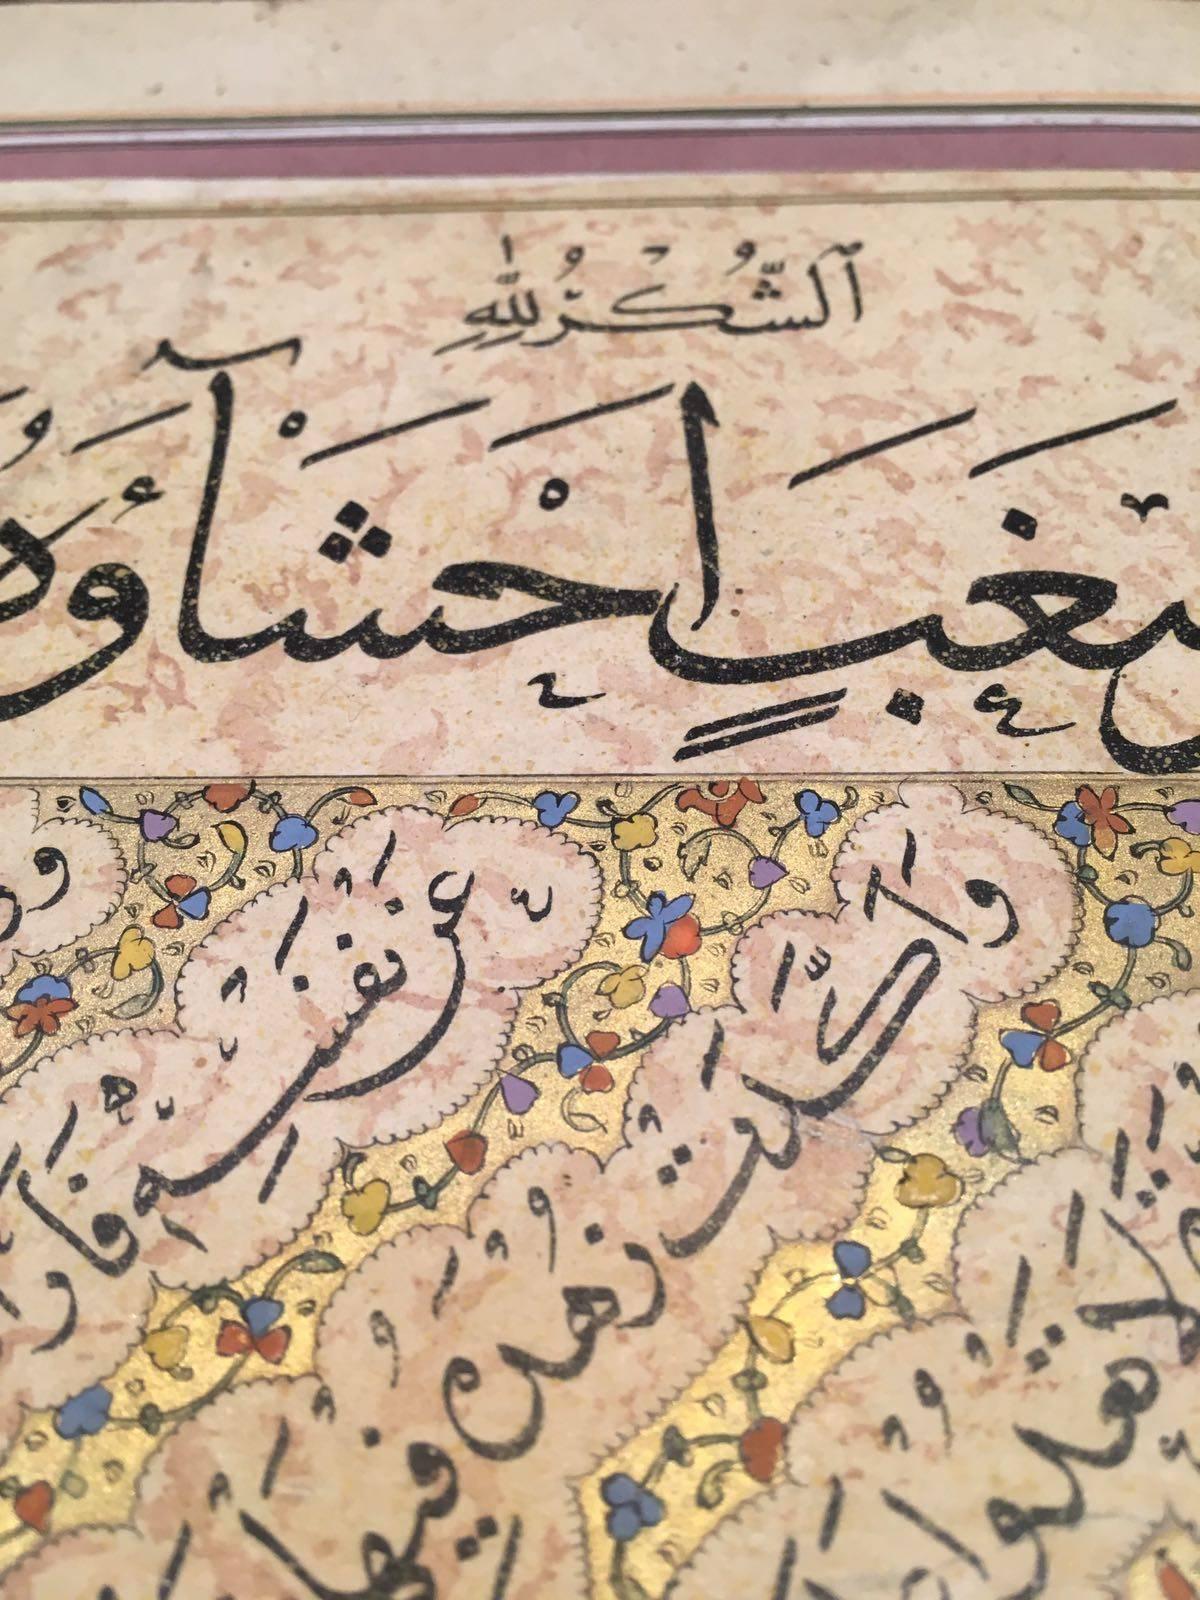 17th century, calligraphy panel attributable to Ala Al Din Al Tabrizi, Safavid, Iran 

Measures: 28 x 40 cm.